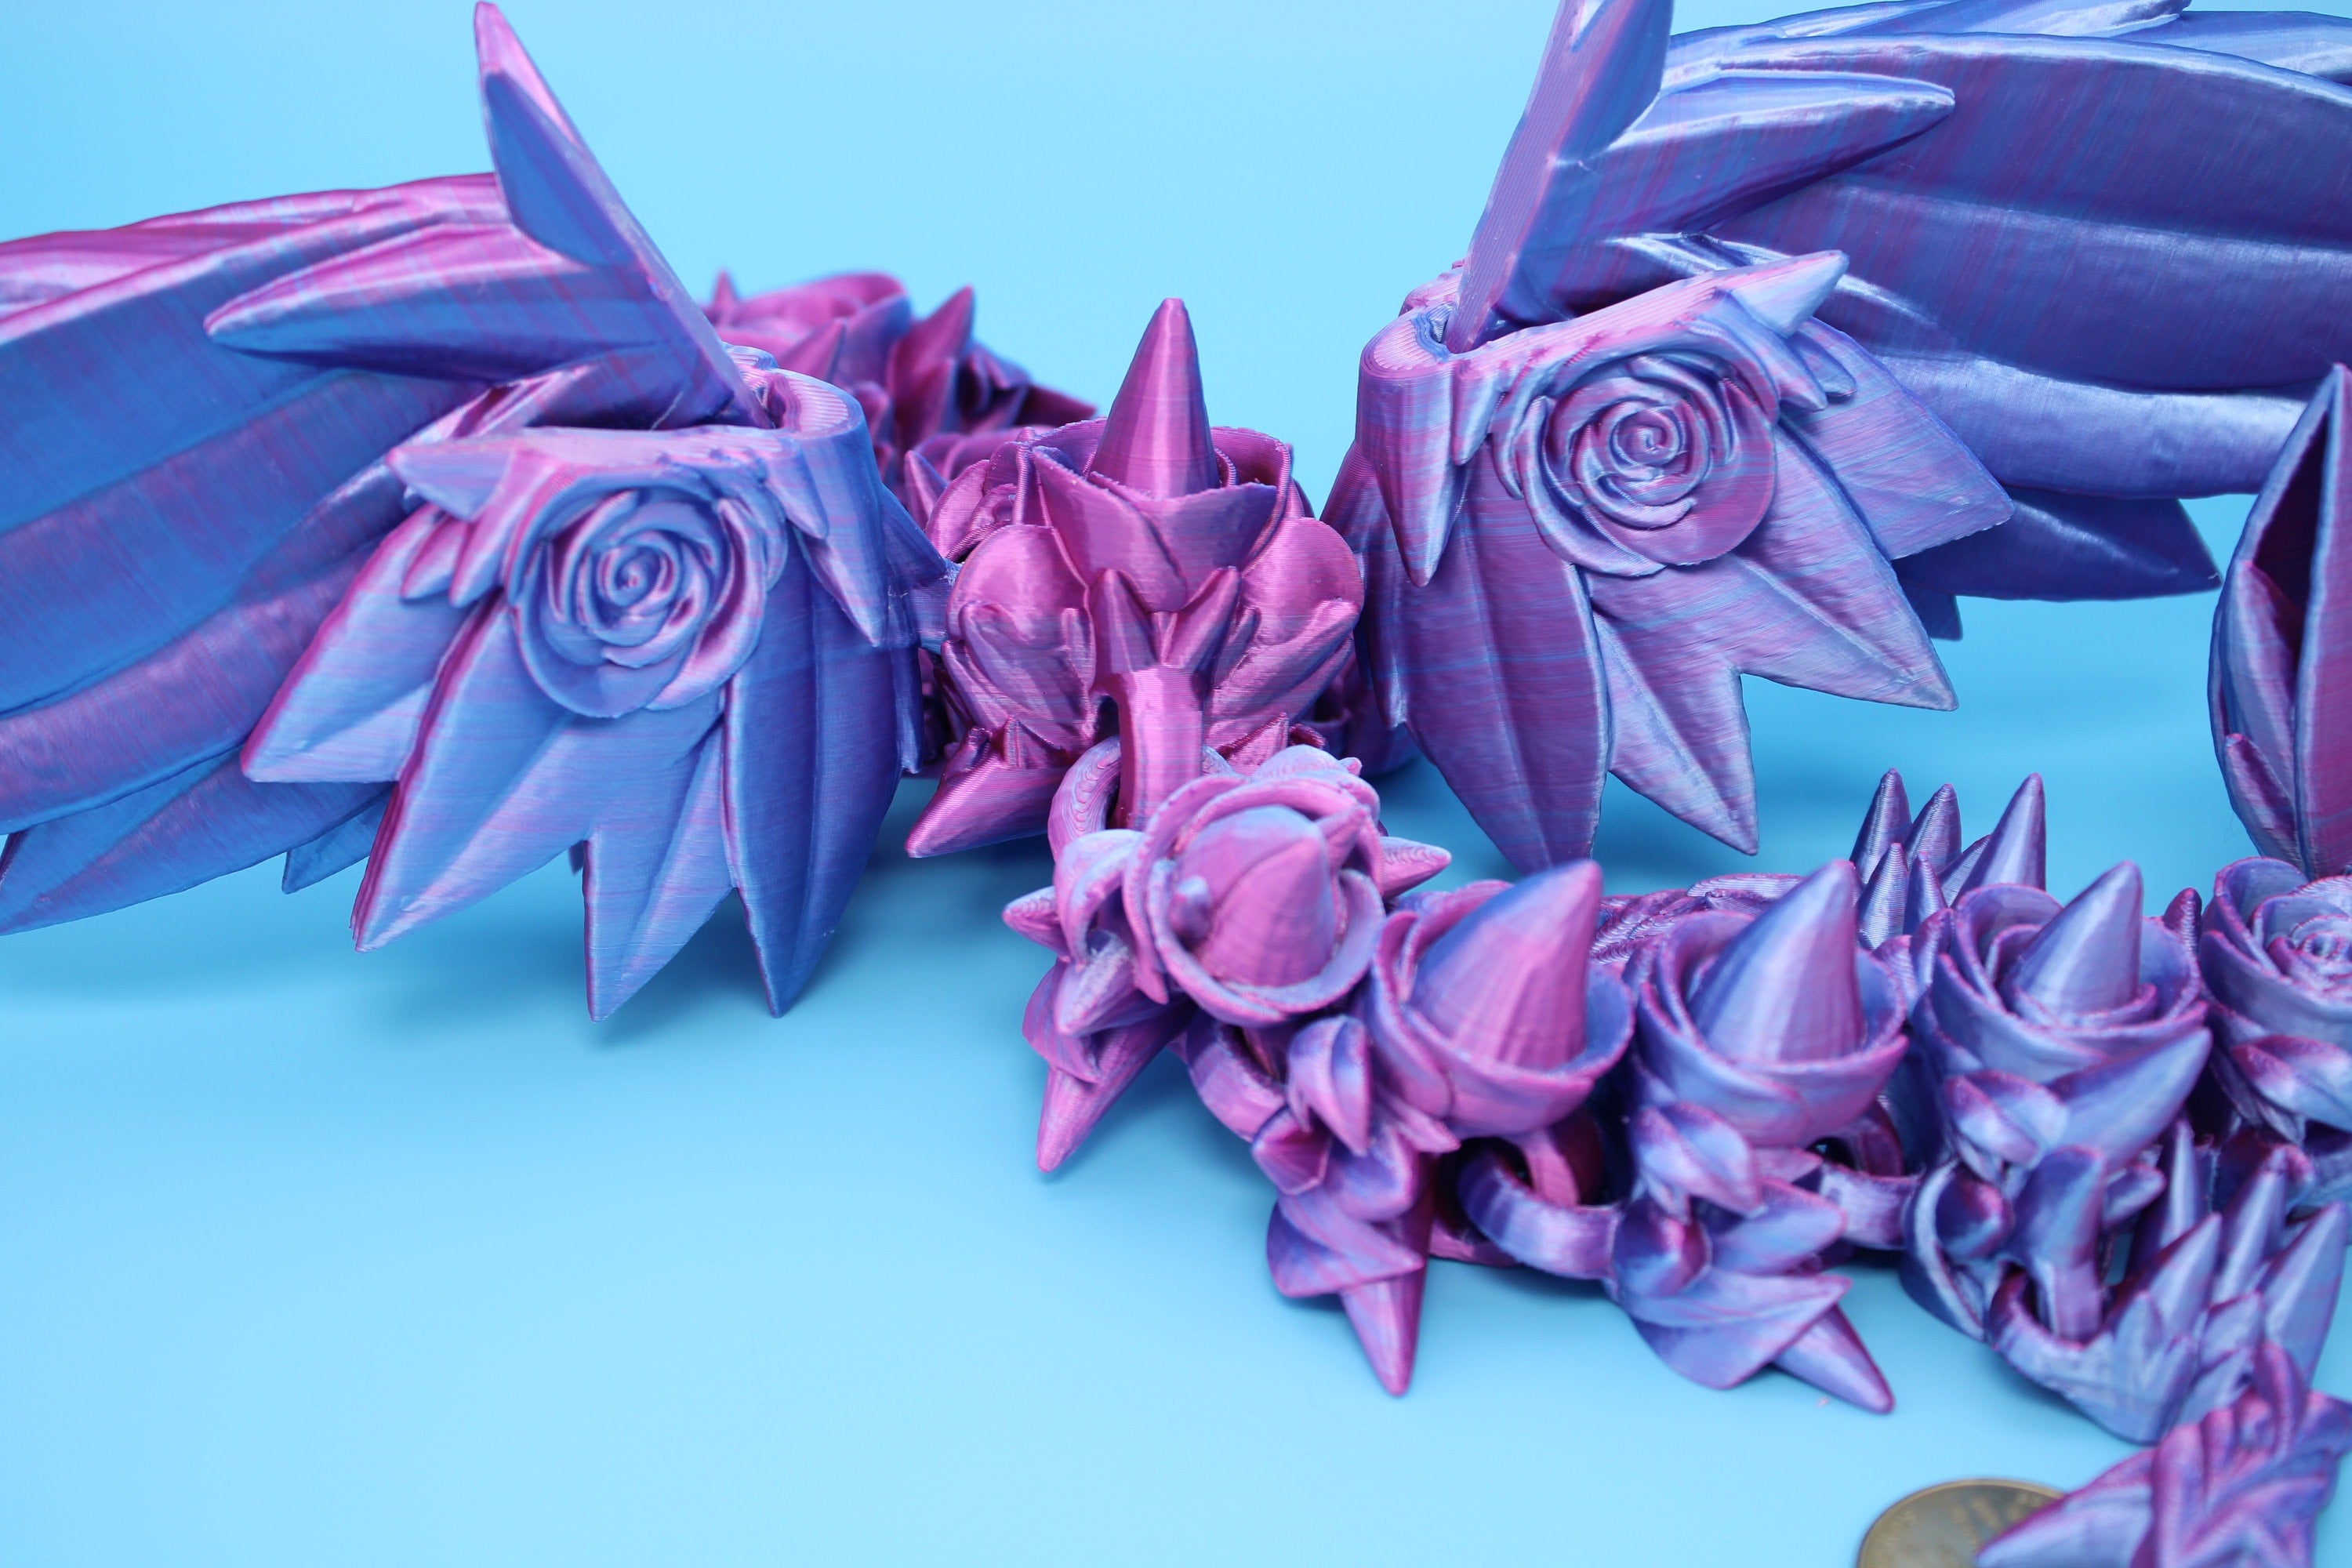 Rose Wing Dragon- Pink & Blue | Articulating Dragon | 3D Printed Fidget | 19 in.